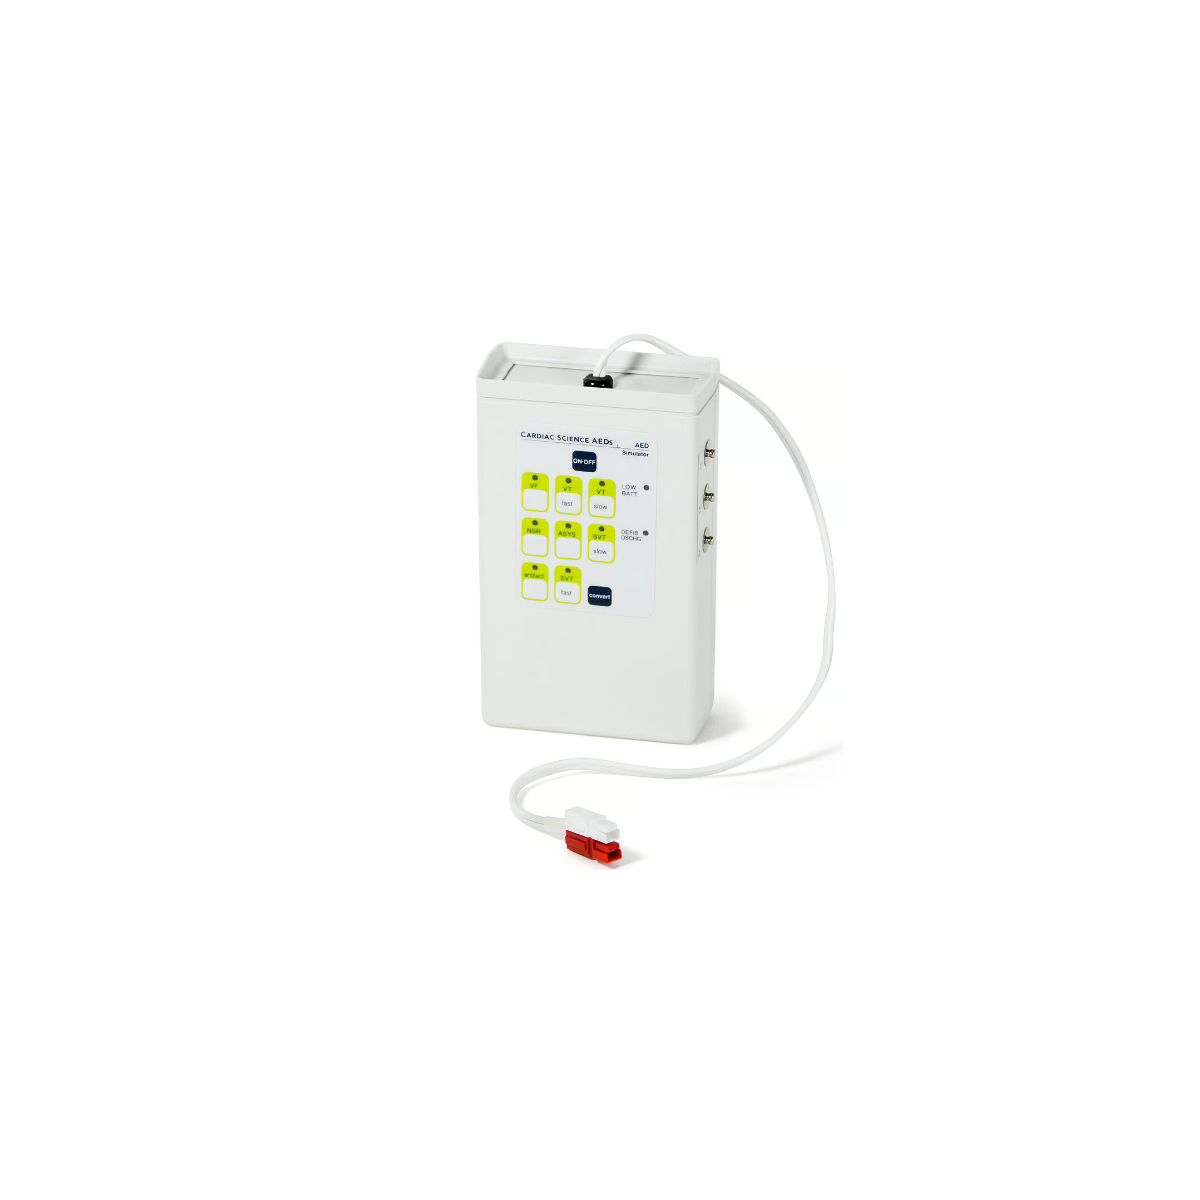 Powerheart G3 AED Simulator w/ 3-lead terminals